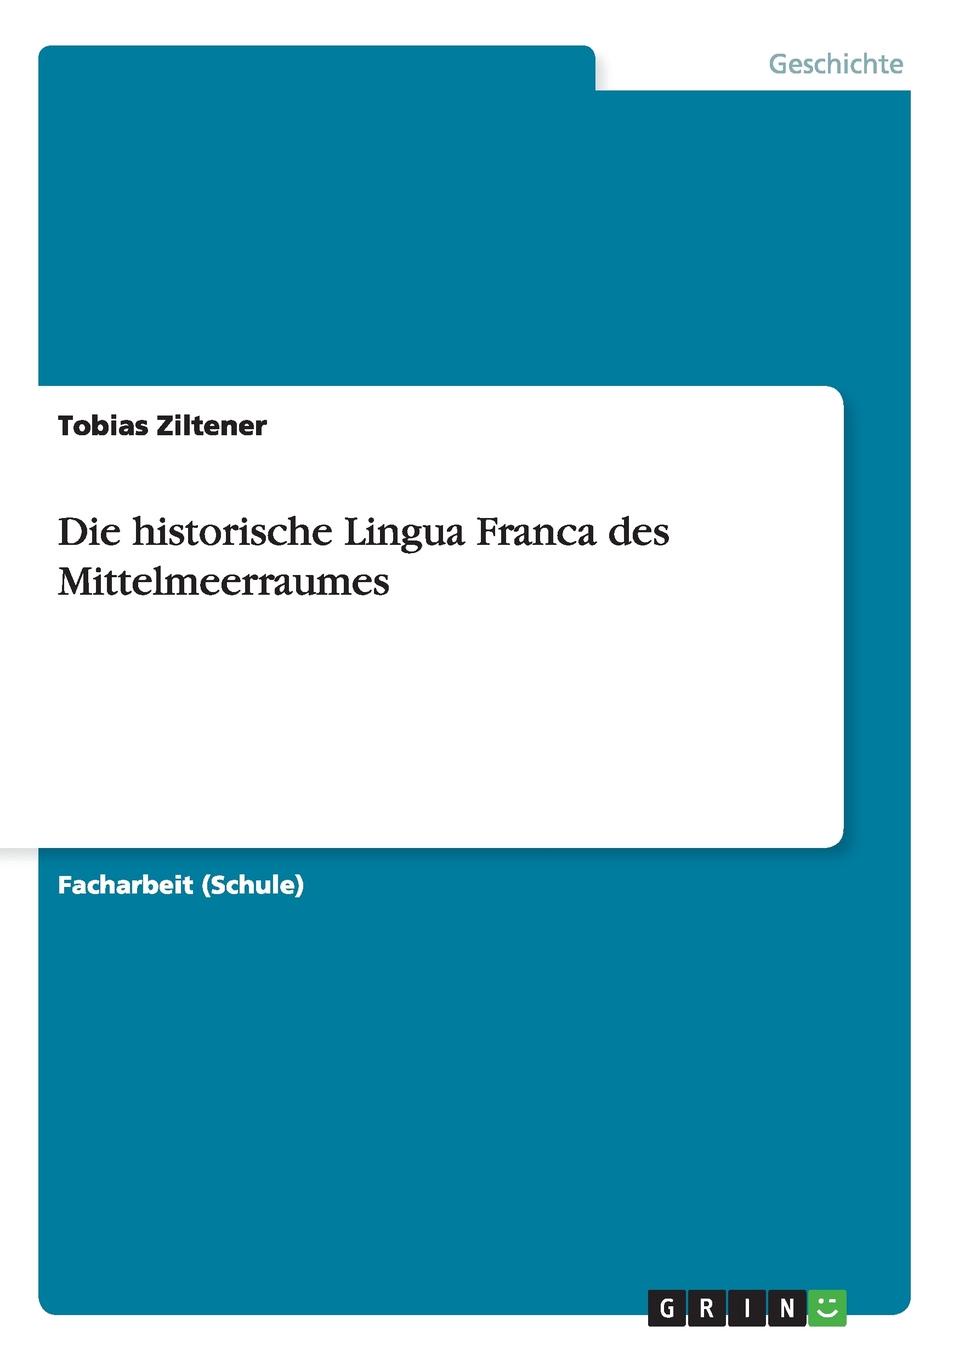 Tobias Ziltener Die historische Lingua Franca des Mittelmeerraumes